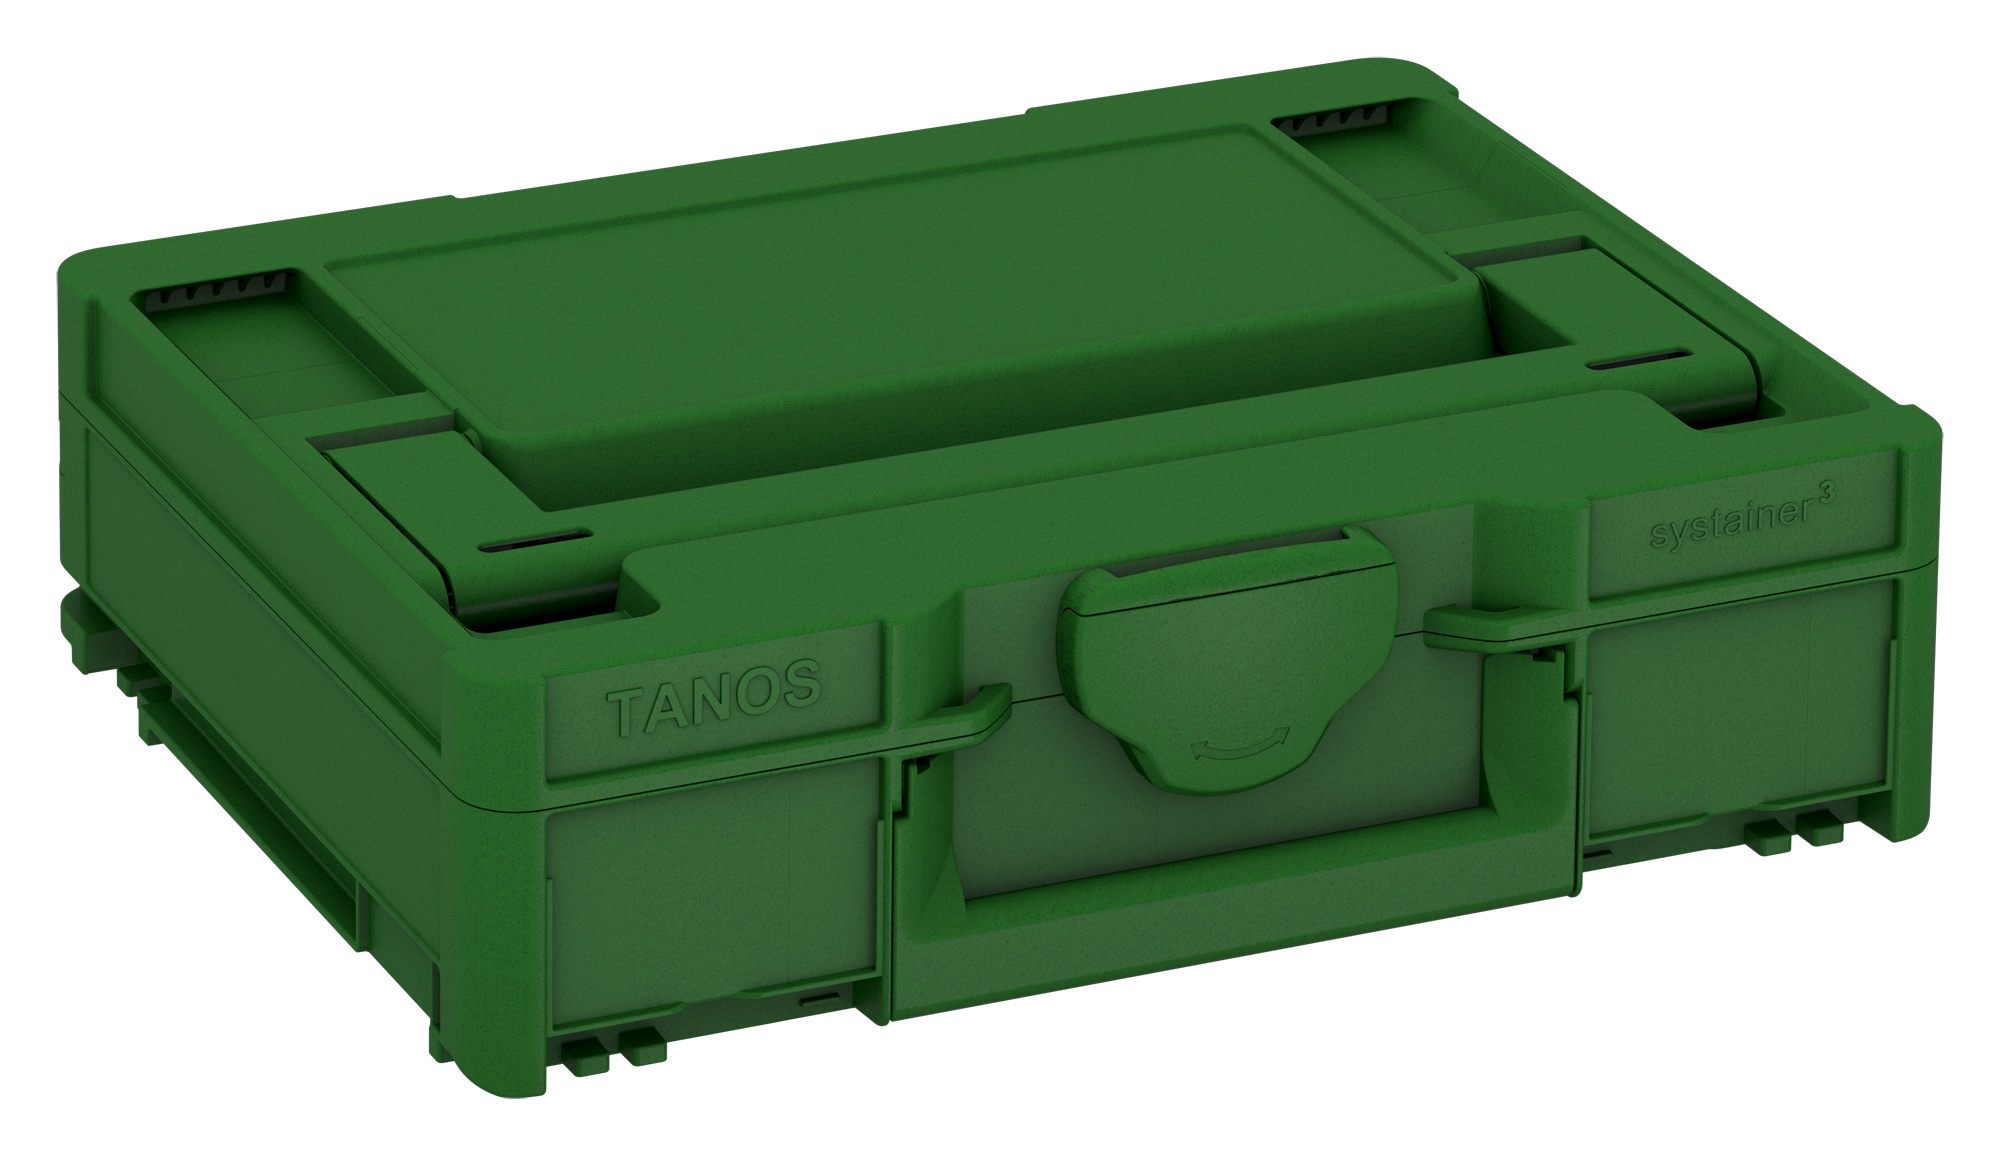 Systainer³ M 112 - Korpus Farbe: Smaragdgrün (RAL 6001) - Griff Farbe: Smaragdgrün (RAL 6001) - Verschluss Farbe: Smaragdgrün (RAL 6001)